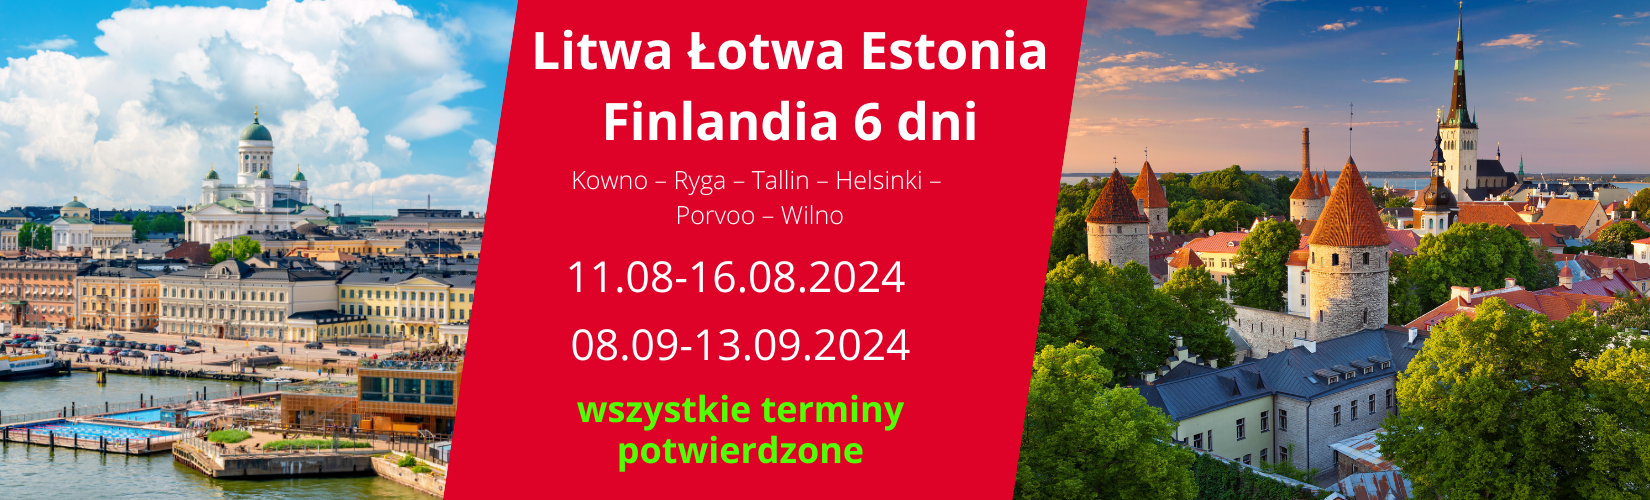 Litwa-Łotwa-Estonia-Finlandia 6 dni